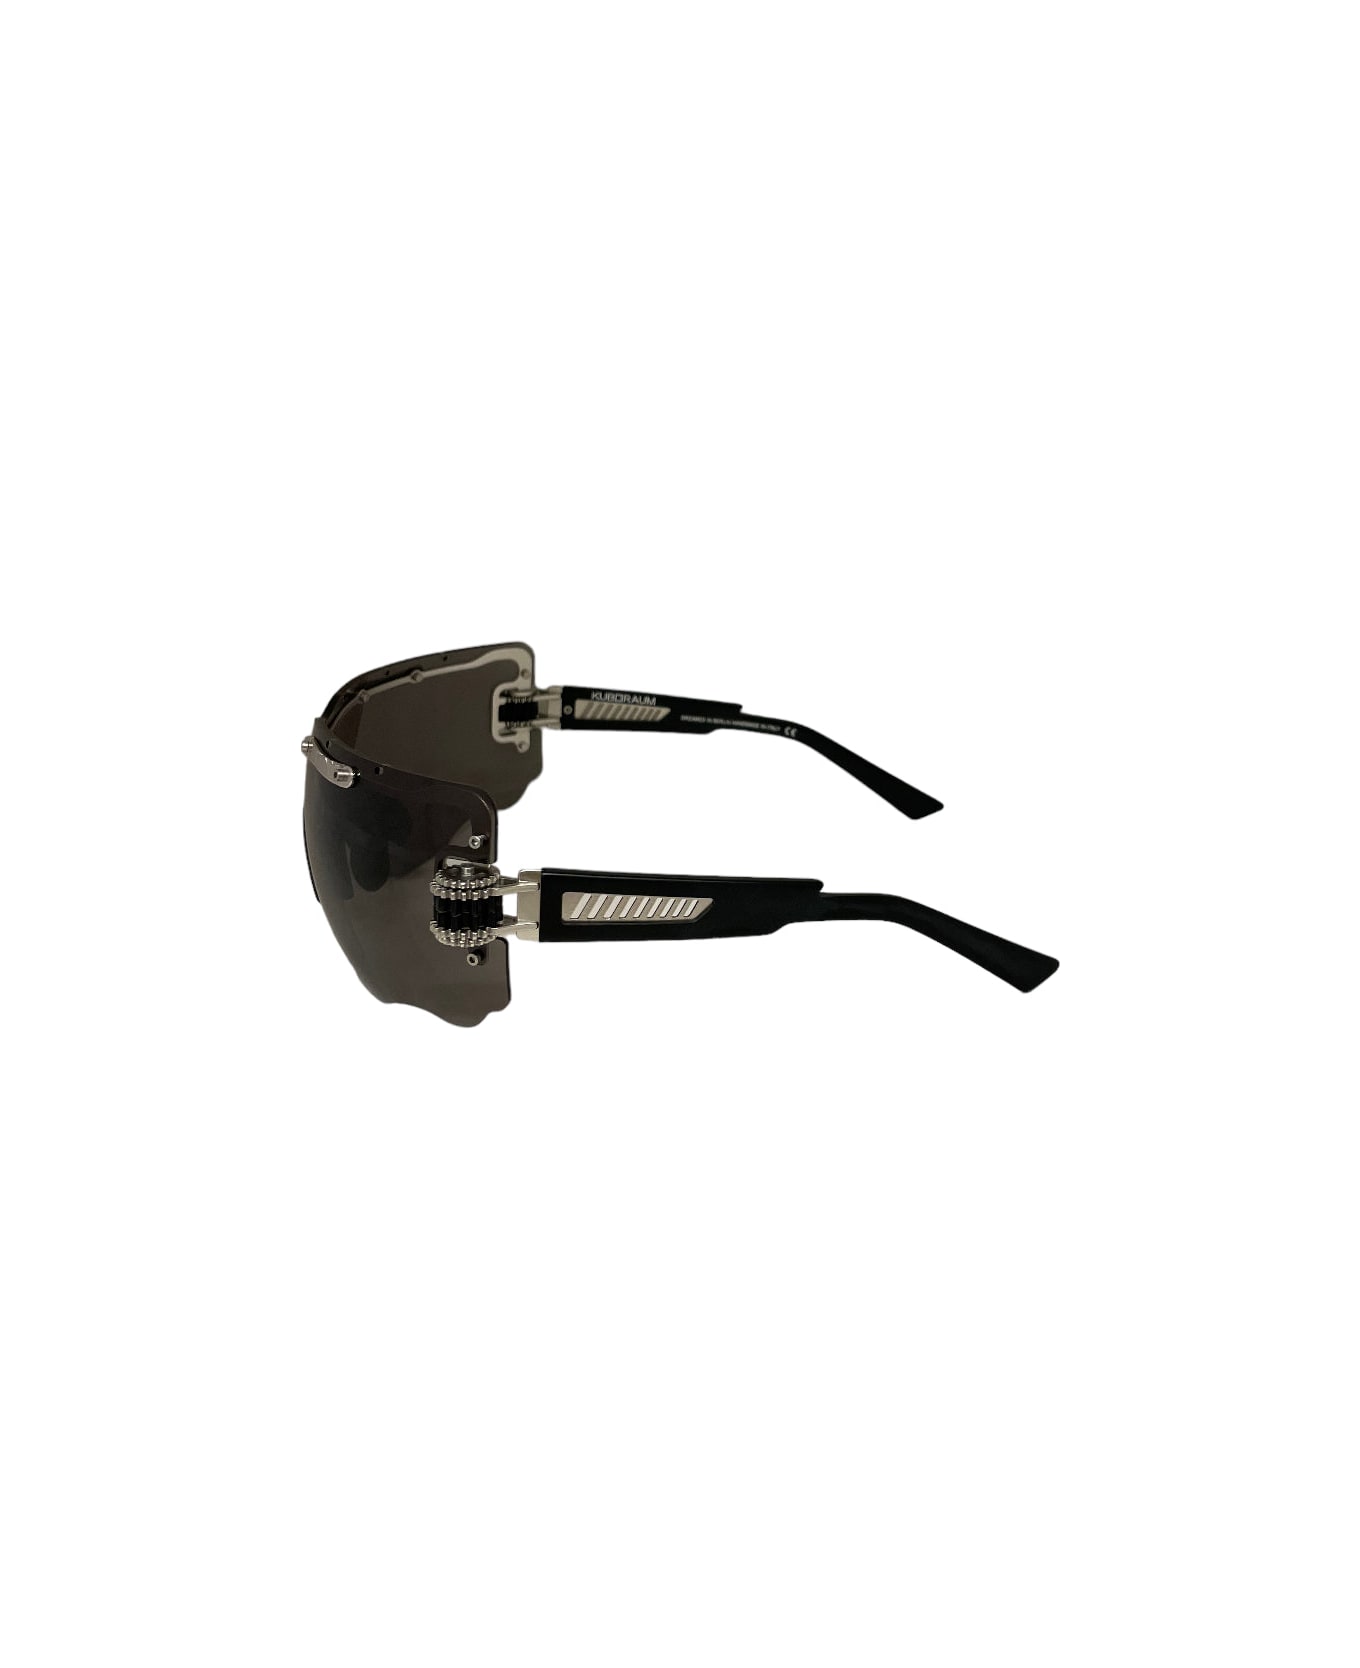 Kuboraum Maske E15 - Black - Limited Edition Sunglasses